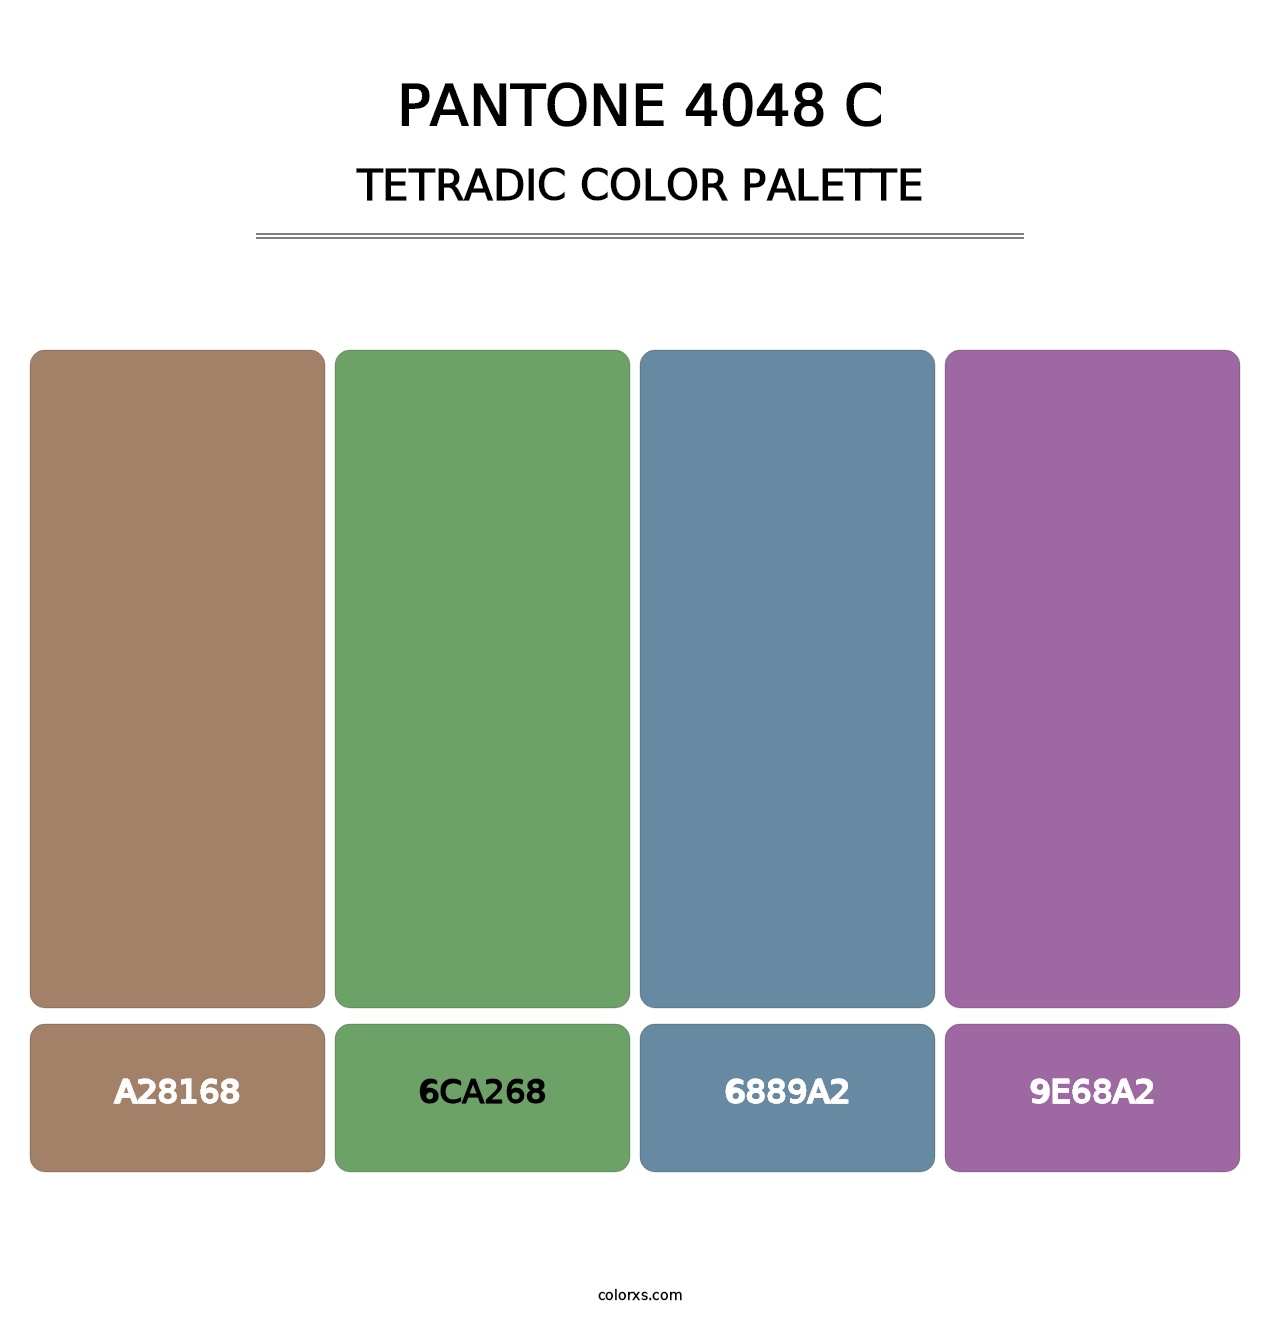 PANTONE 4048 C - Tetradic Color Palette